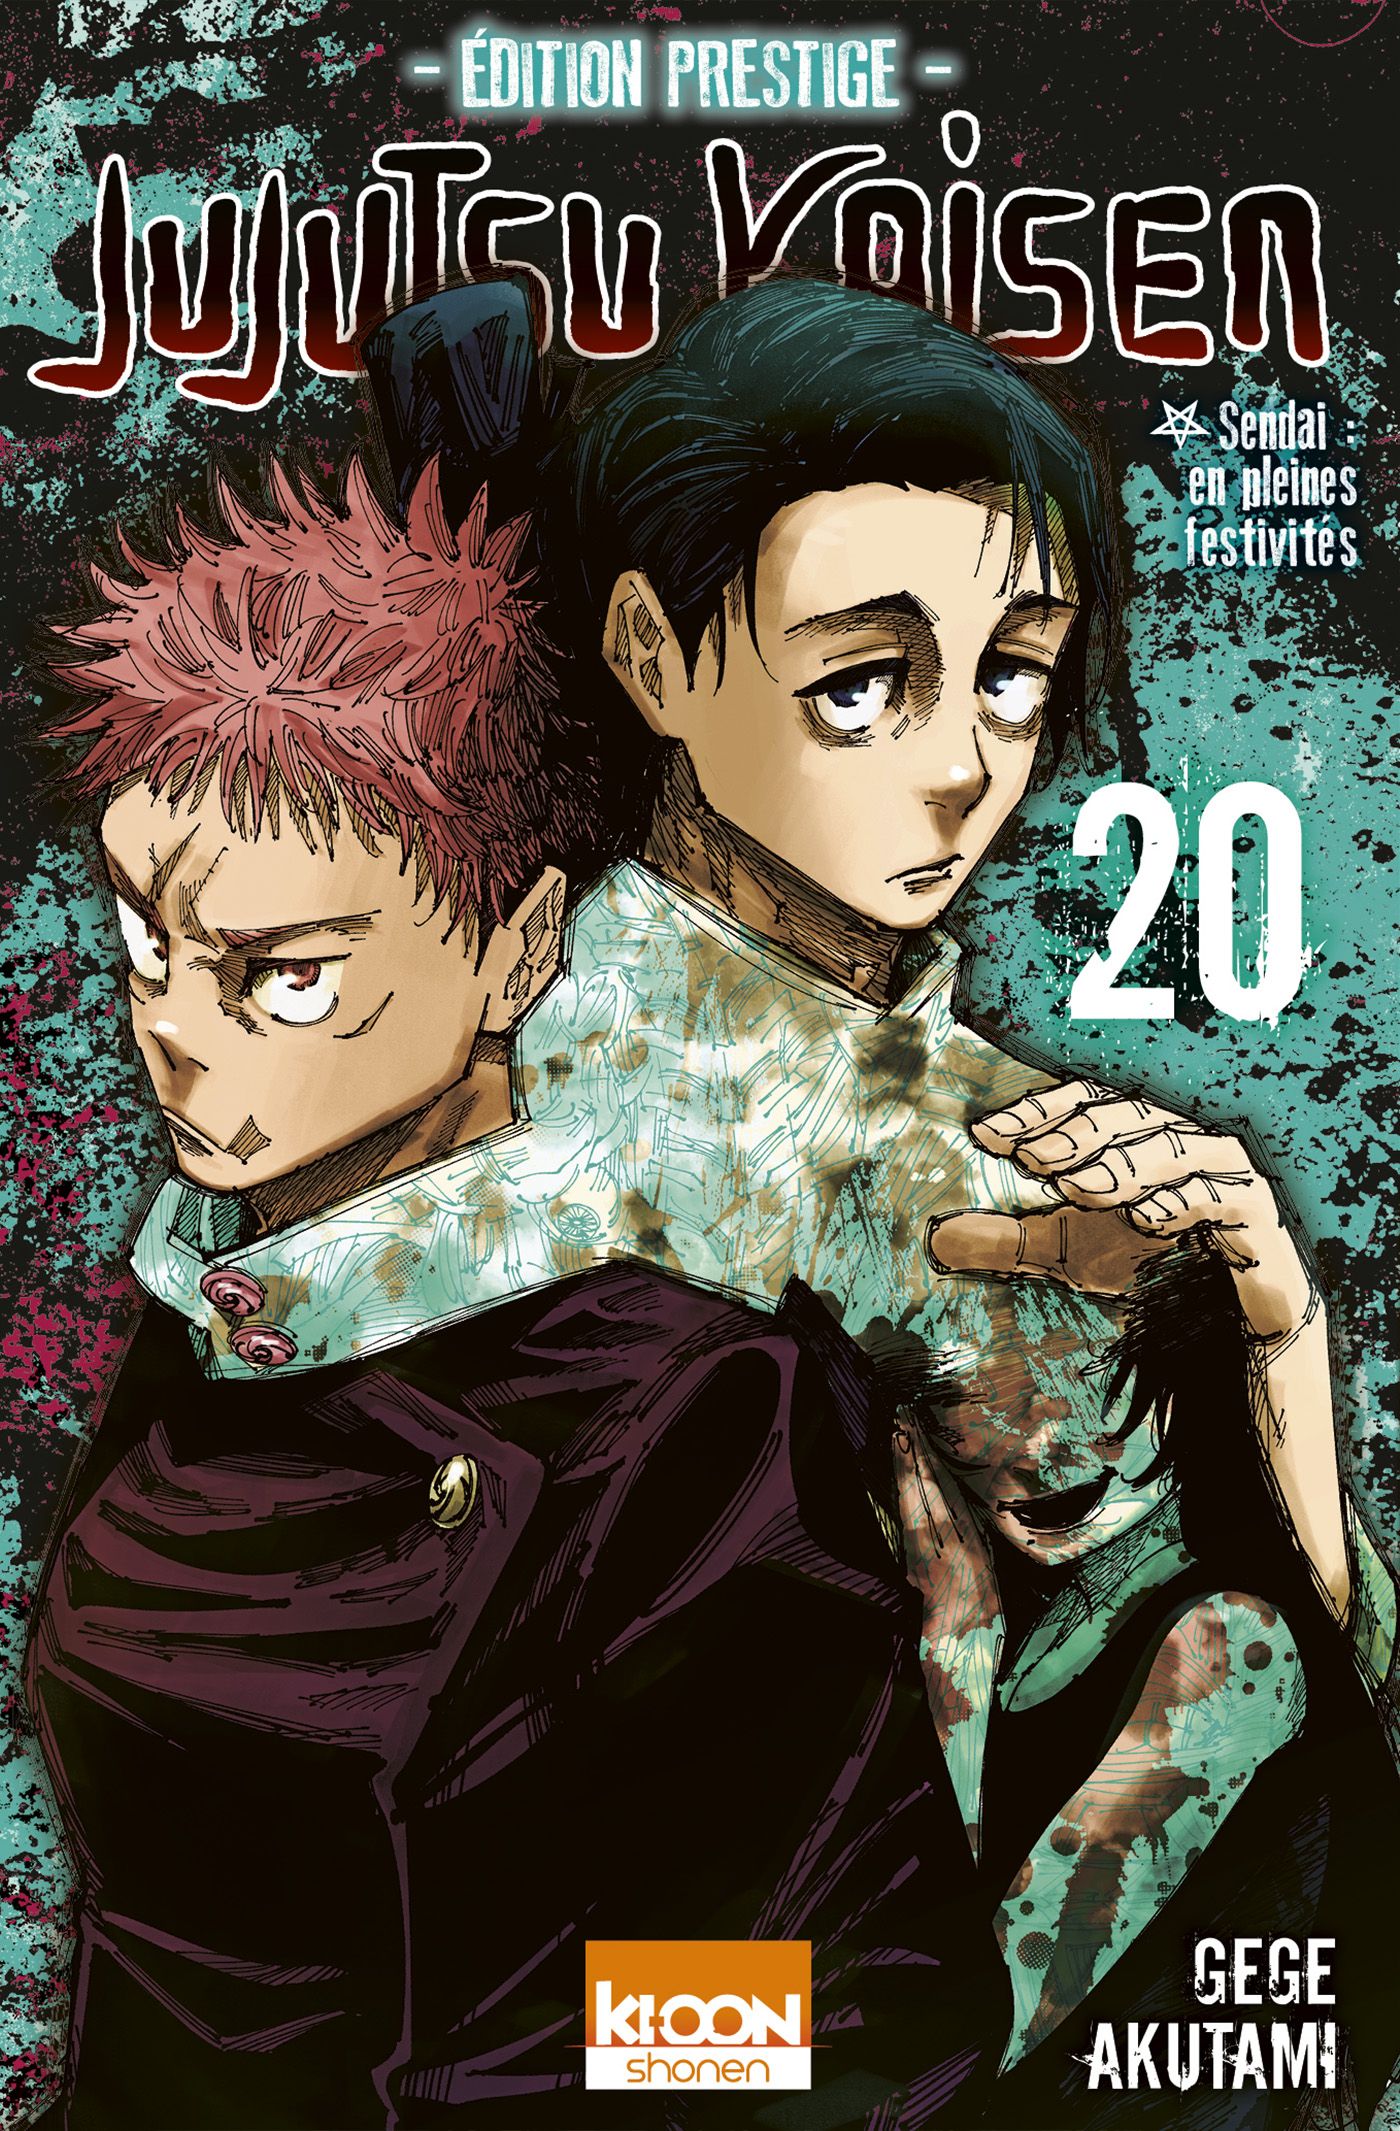 GEGE AKUTAMI - Jujutsu kaisen #20 Cof. Éd. prestige - Mangas